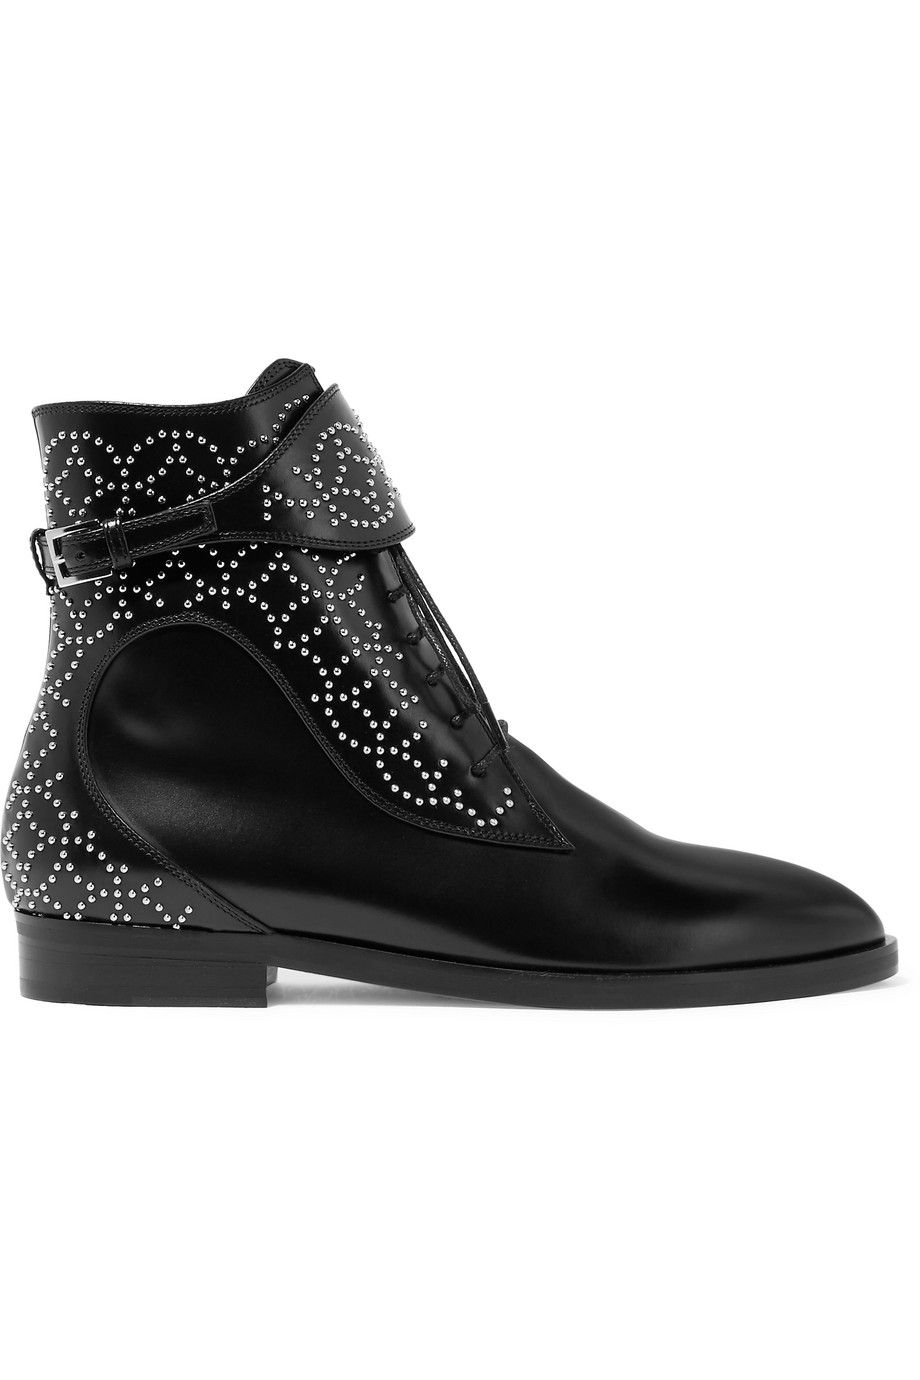 #PopbelaOOTD: Pilihan Sepatu Boots Keren A la Fashionista